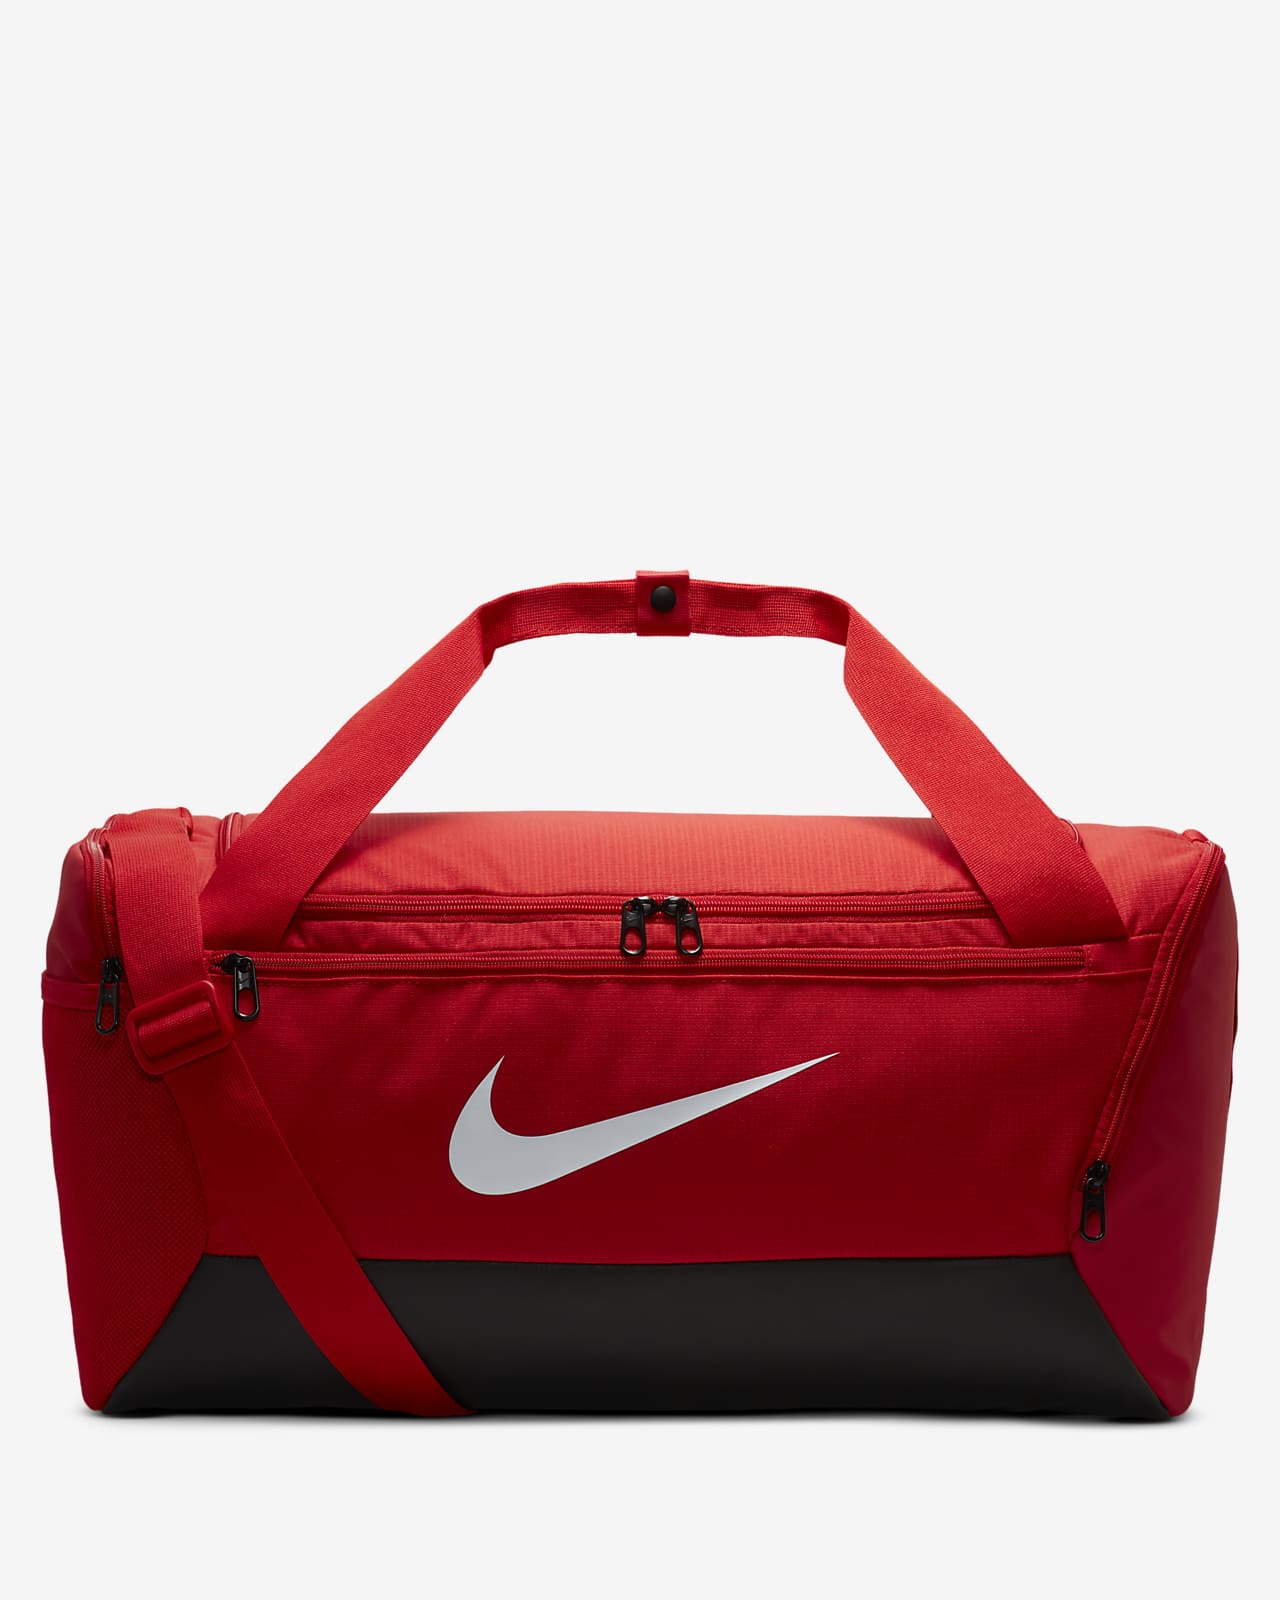 Nike Brasilia Small Duffel - University Red